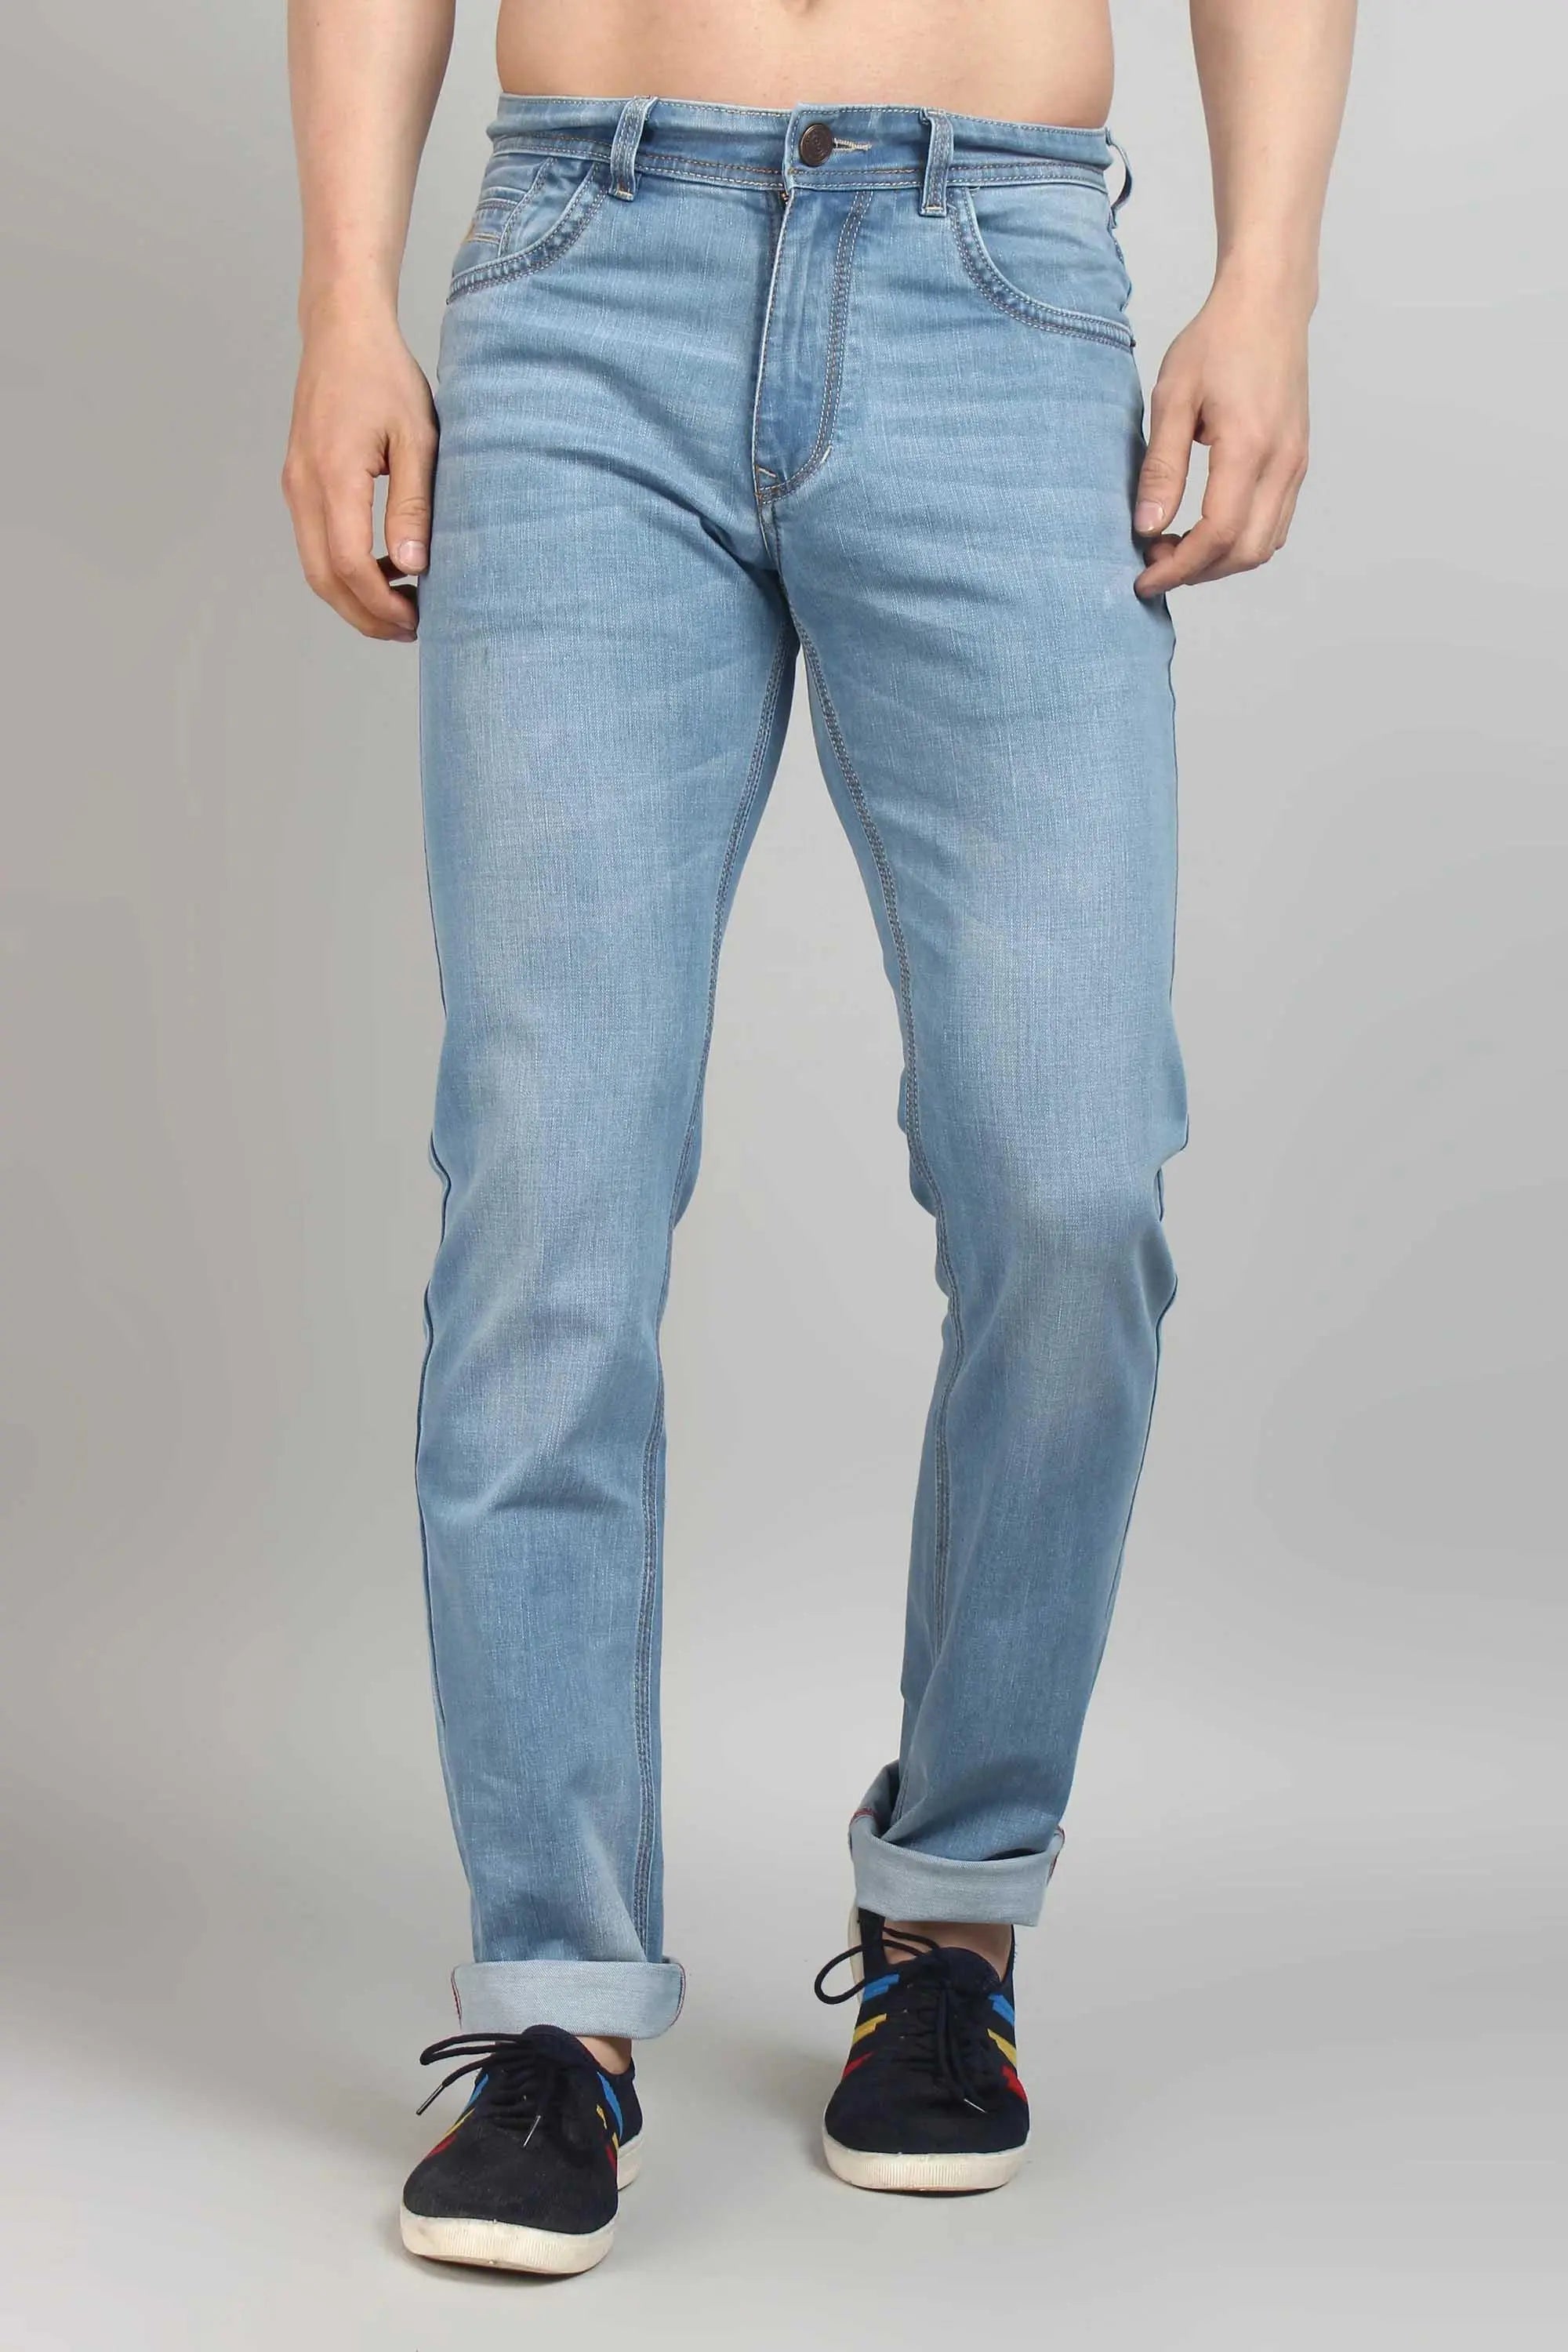 Billabong Women's New Boy Denim Jeans | Light Well Worn | Pinnacle Malibu